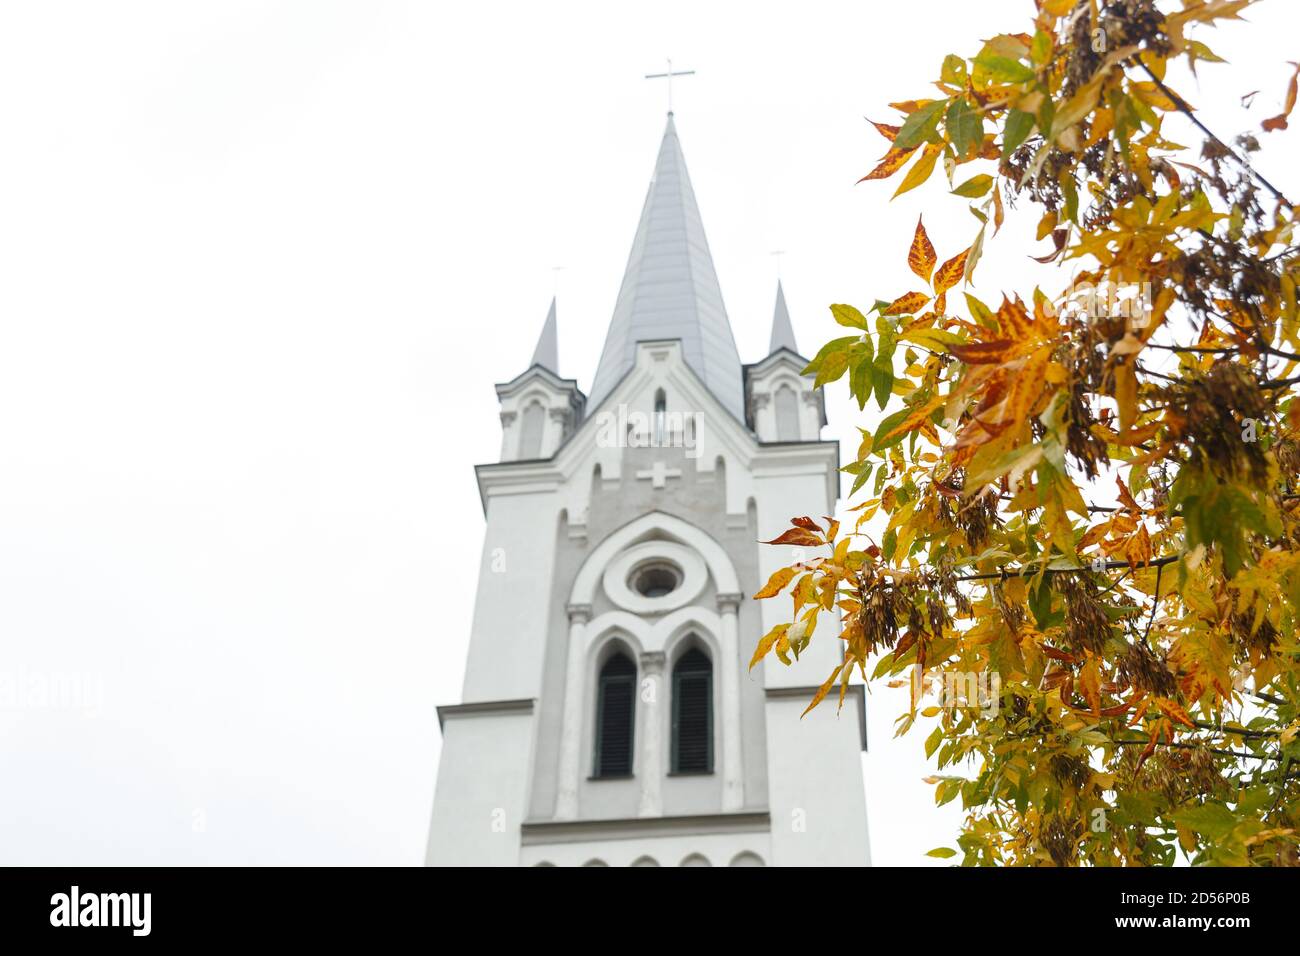 Iglesia Luterana de San Juan en Grodno, Bielorrusia al fondo. Rama de fresno con hojas amarillentas. Paisaje otoñal. Foto de stock